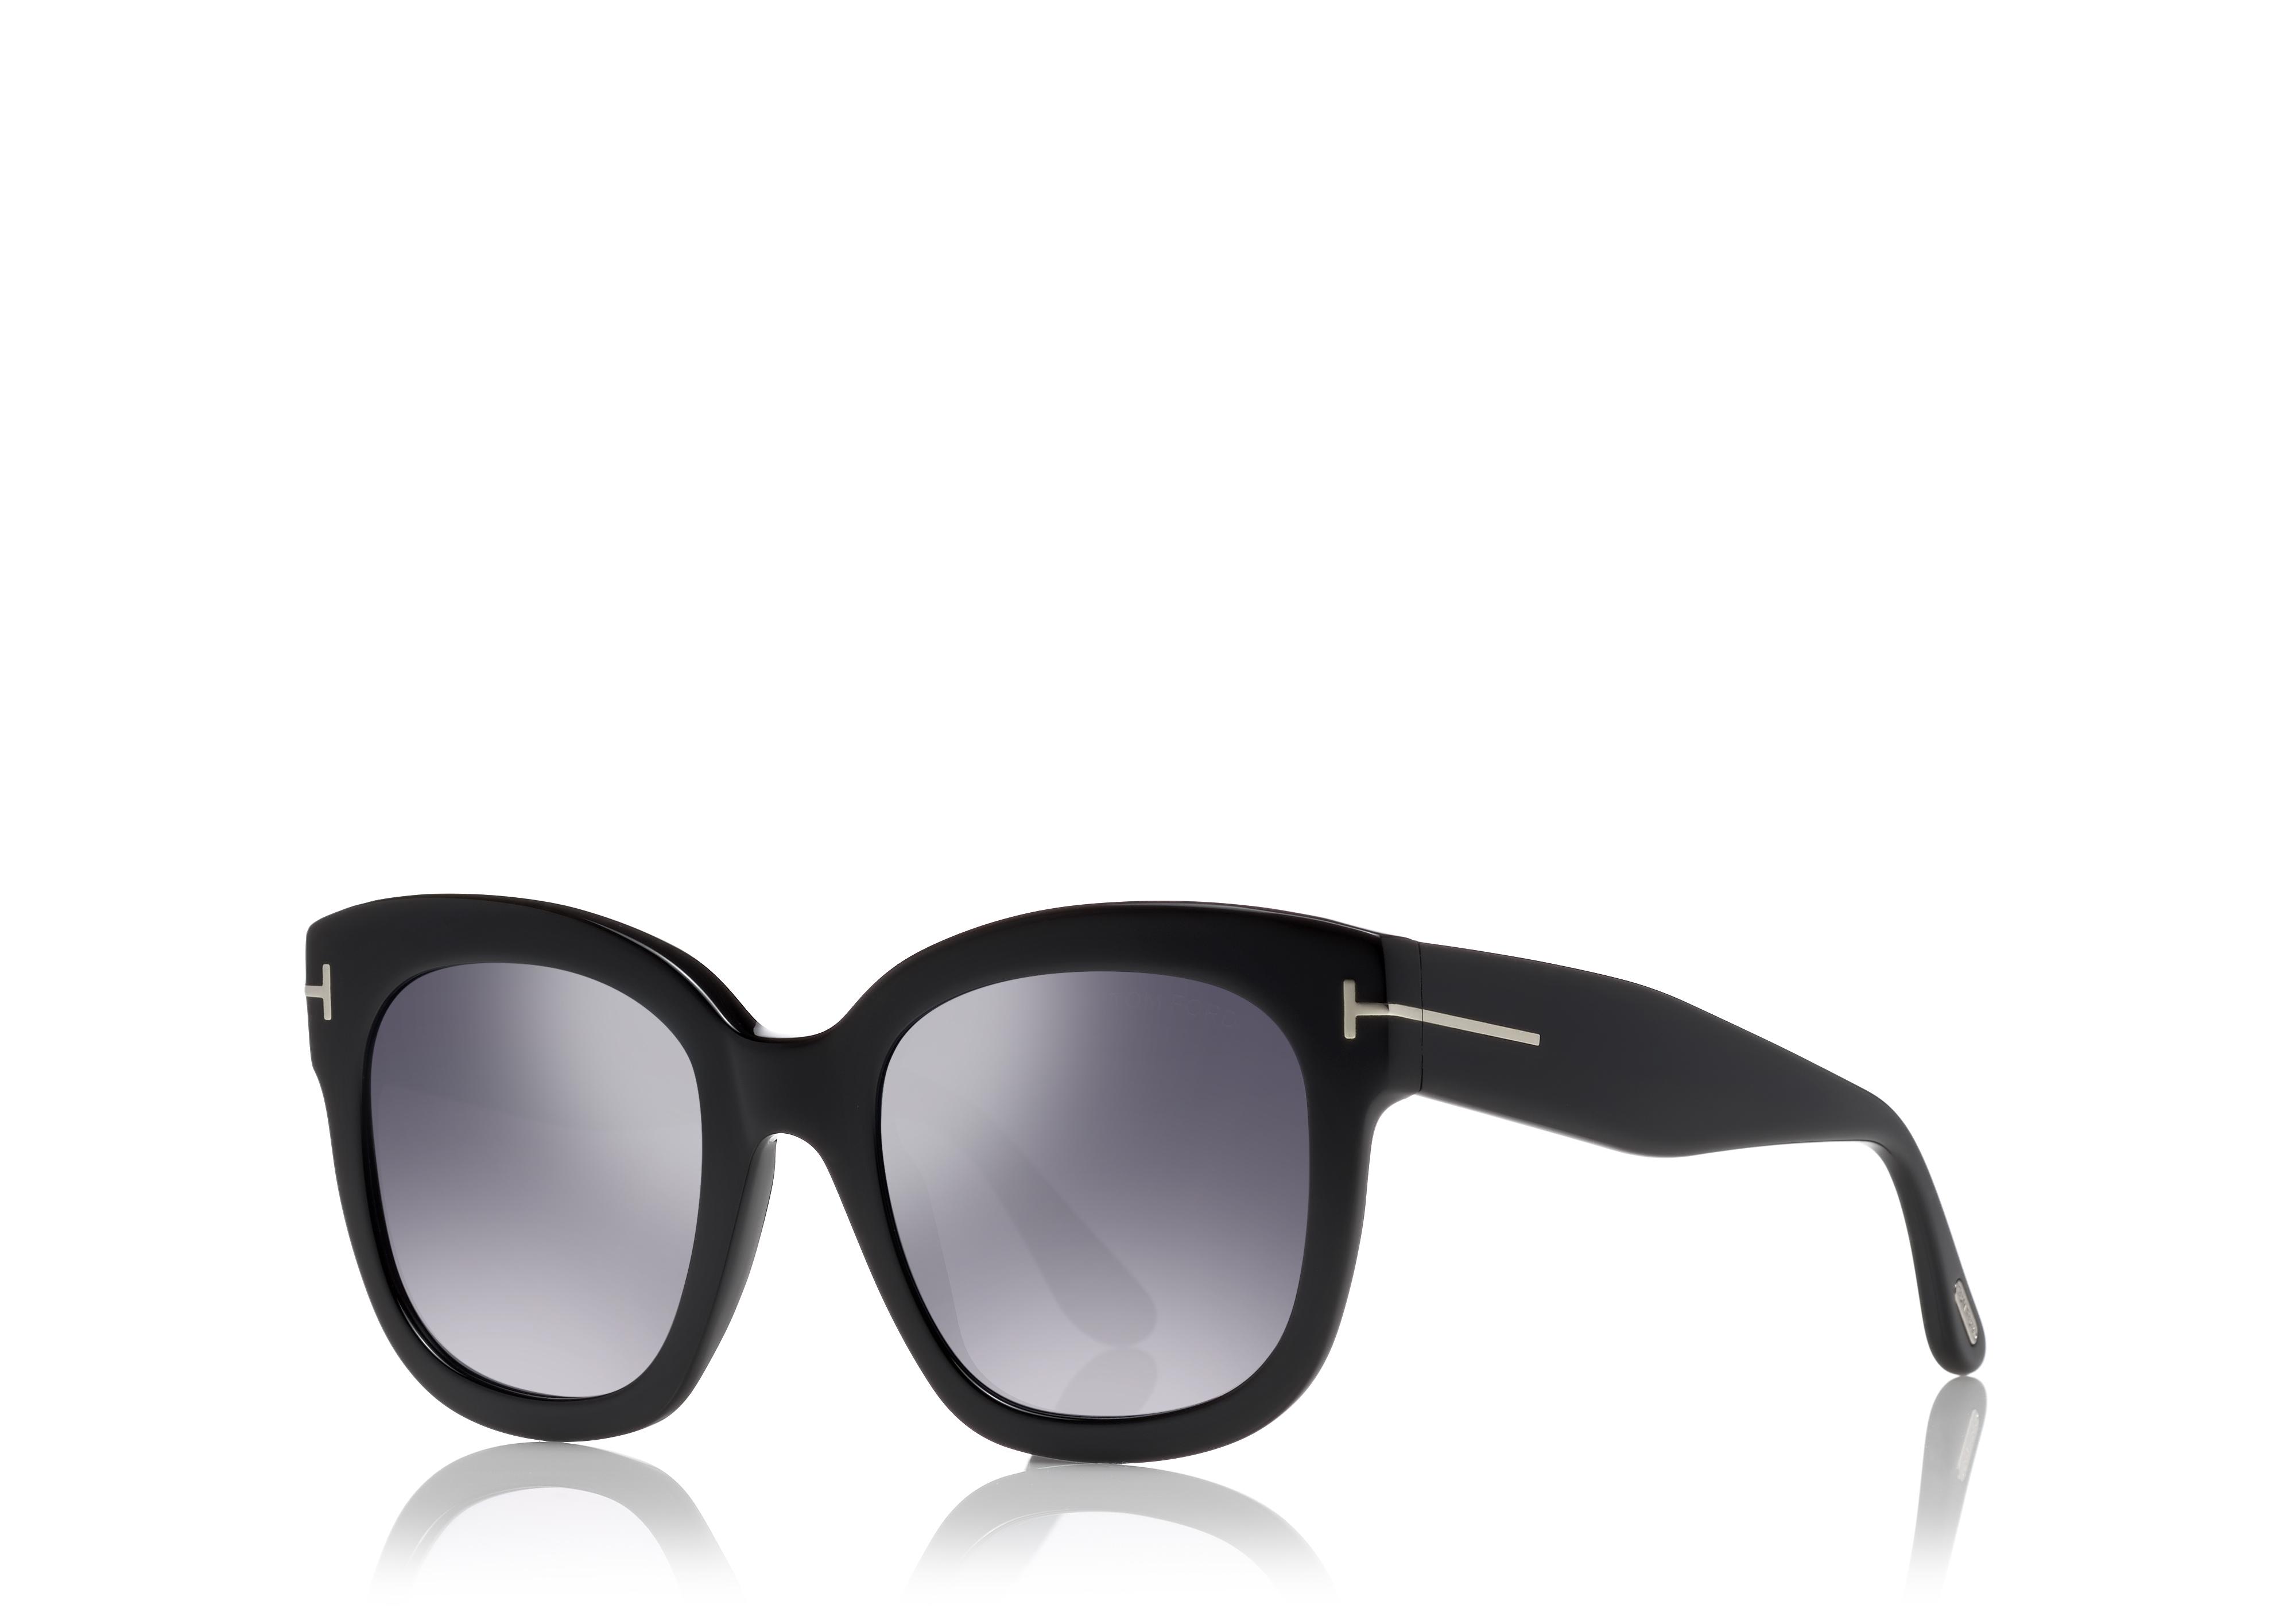 Tom Ford BEATRIX-02 FT 0613 transparent lightbrown/lightbrown shaded Sunglasses